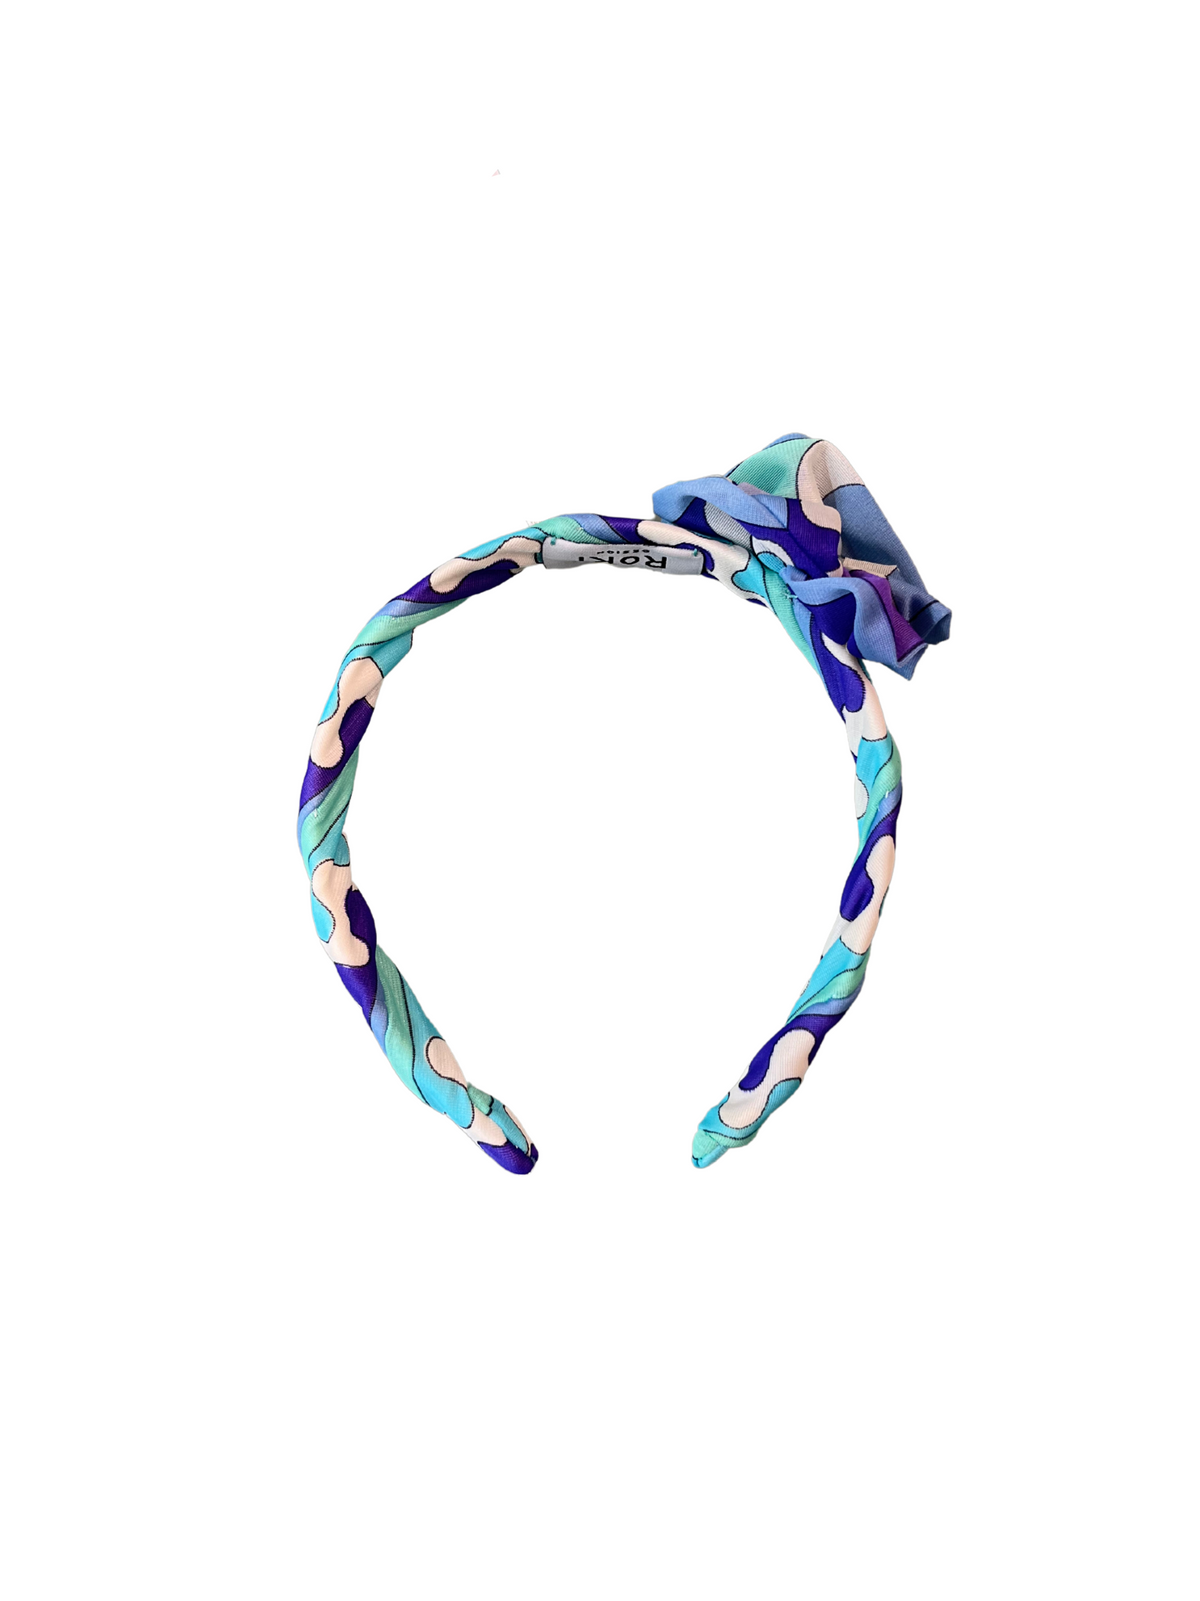 Pucci Waves Headband | RoKi Designs